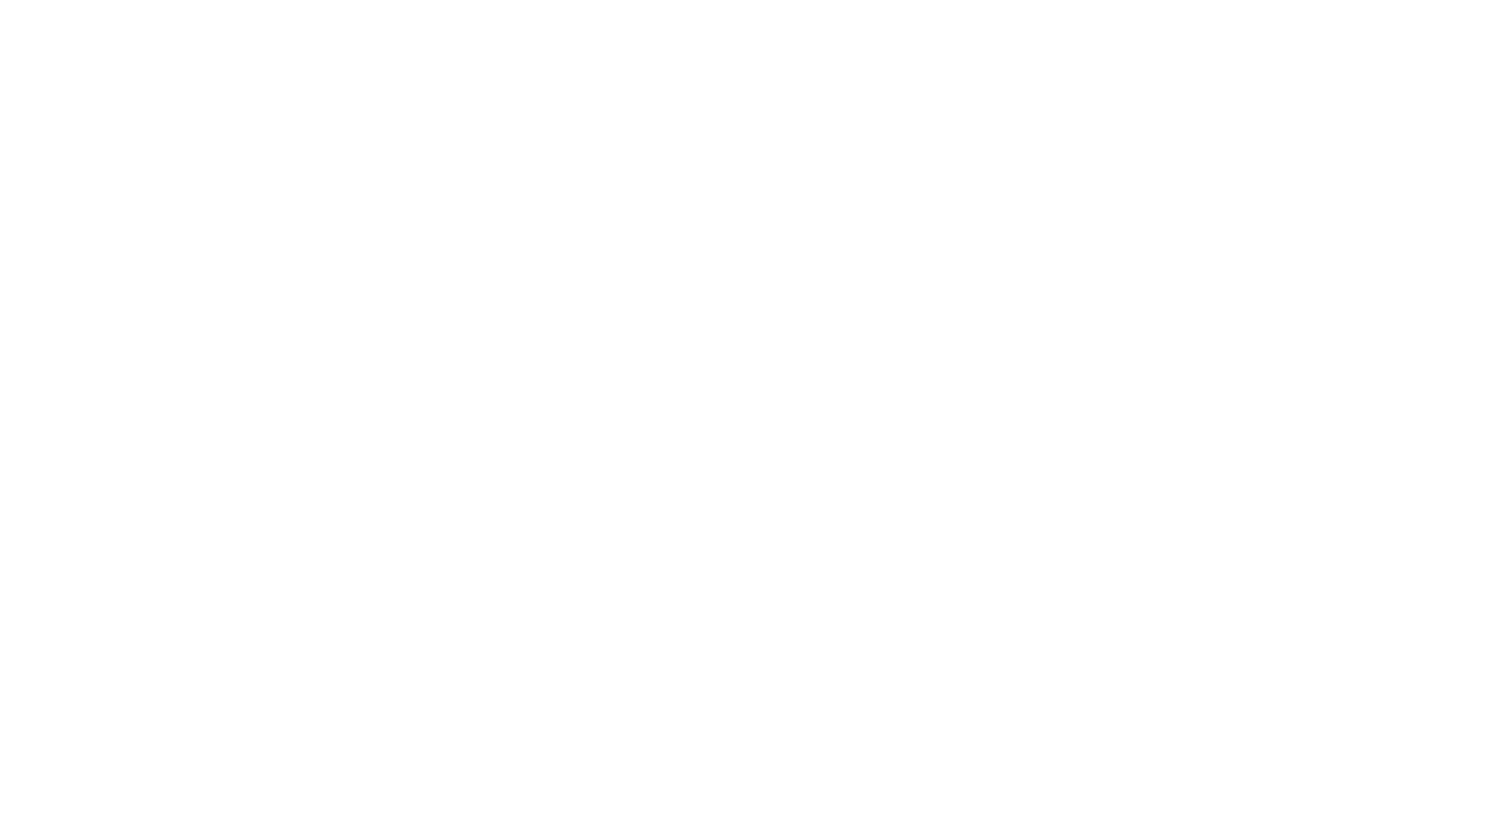 John Jameson's Public Sector Tech